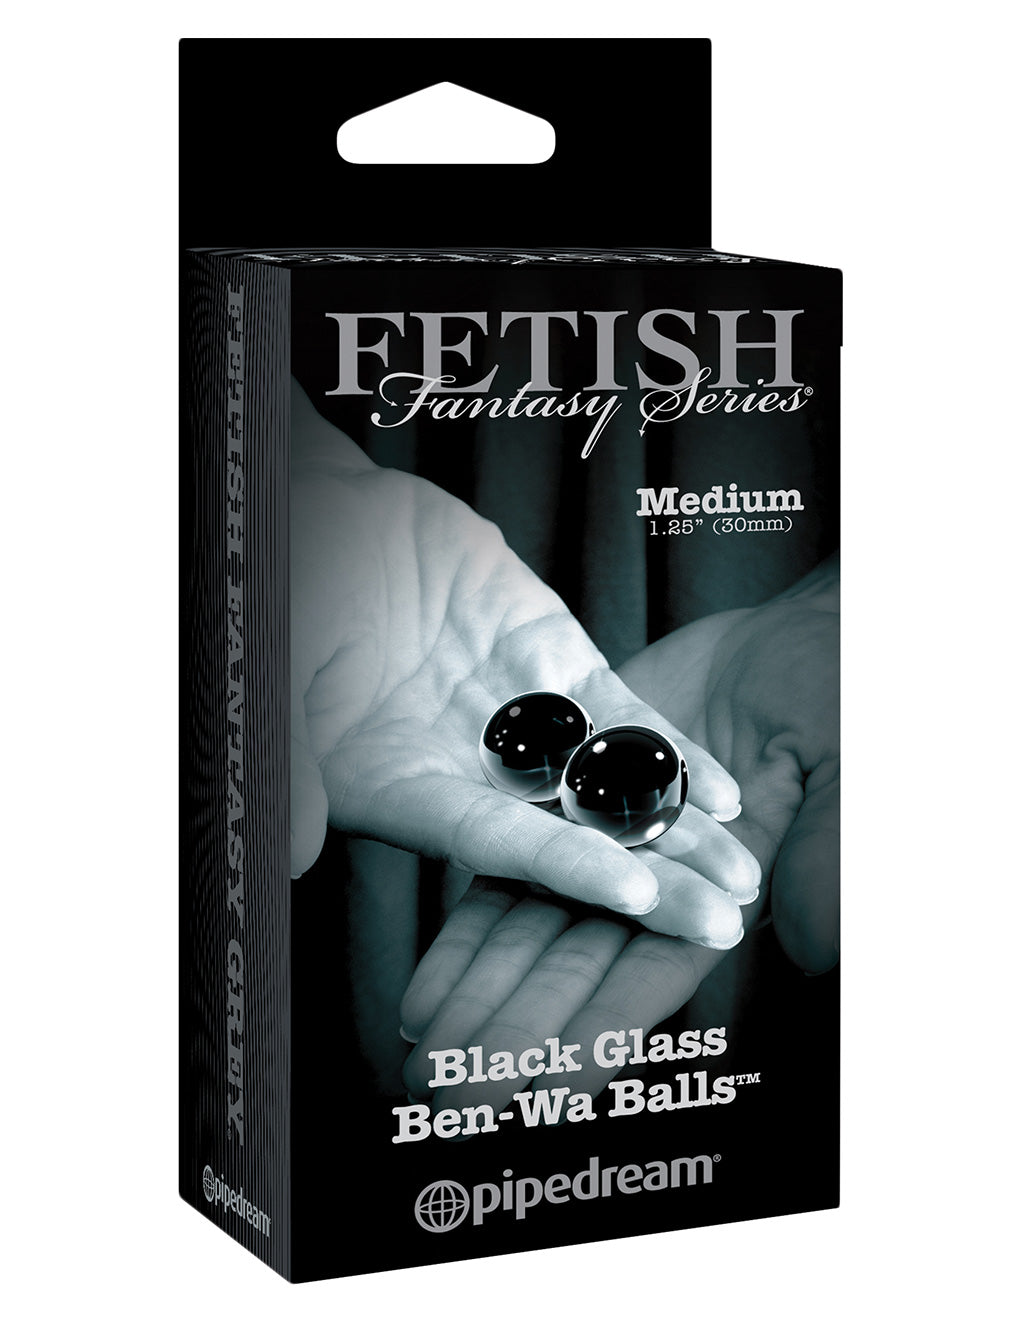 Fetish Fantasy Black Glass Ben-Wa Balls Medium - Novelties - Kegel